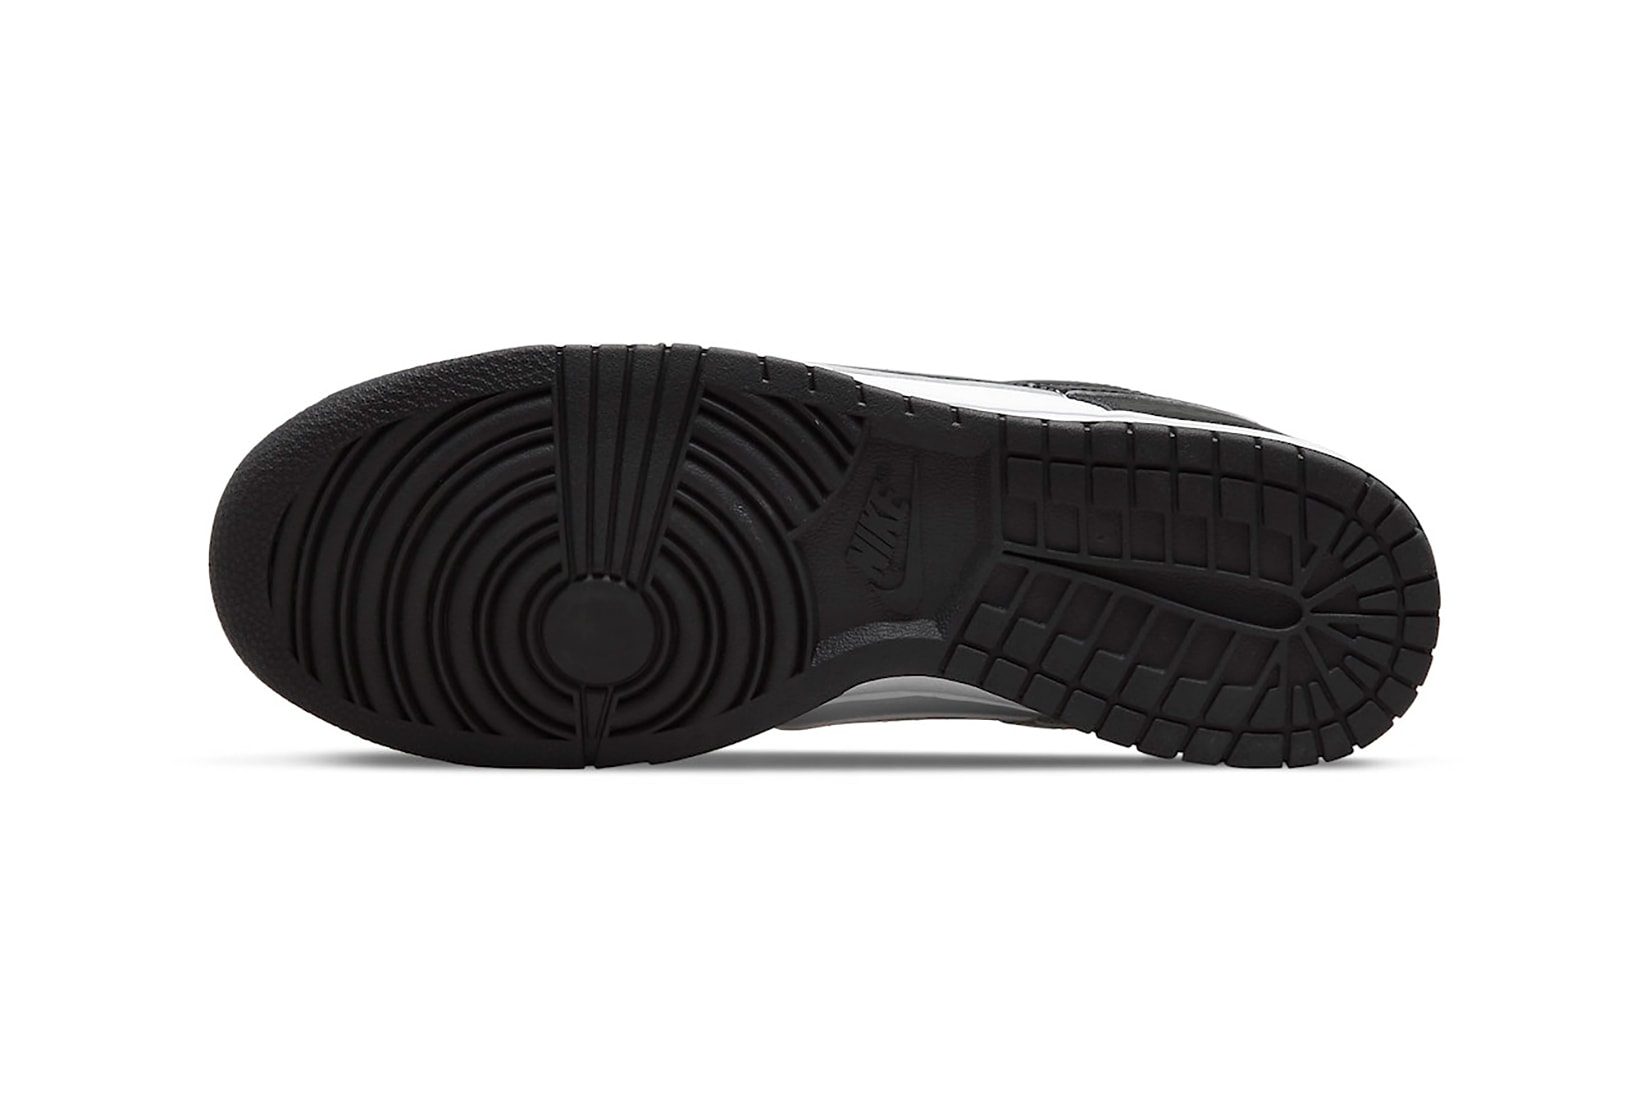 Nike Dunk Low Black White World Champ Sneakers Footwear Kicks Shoes